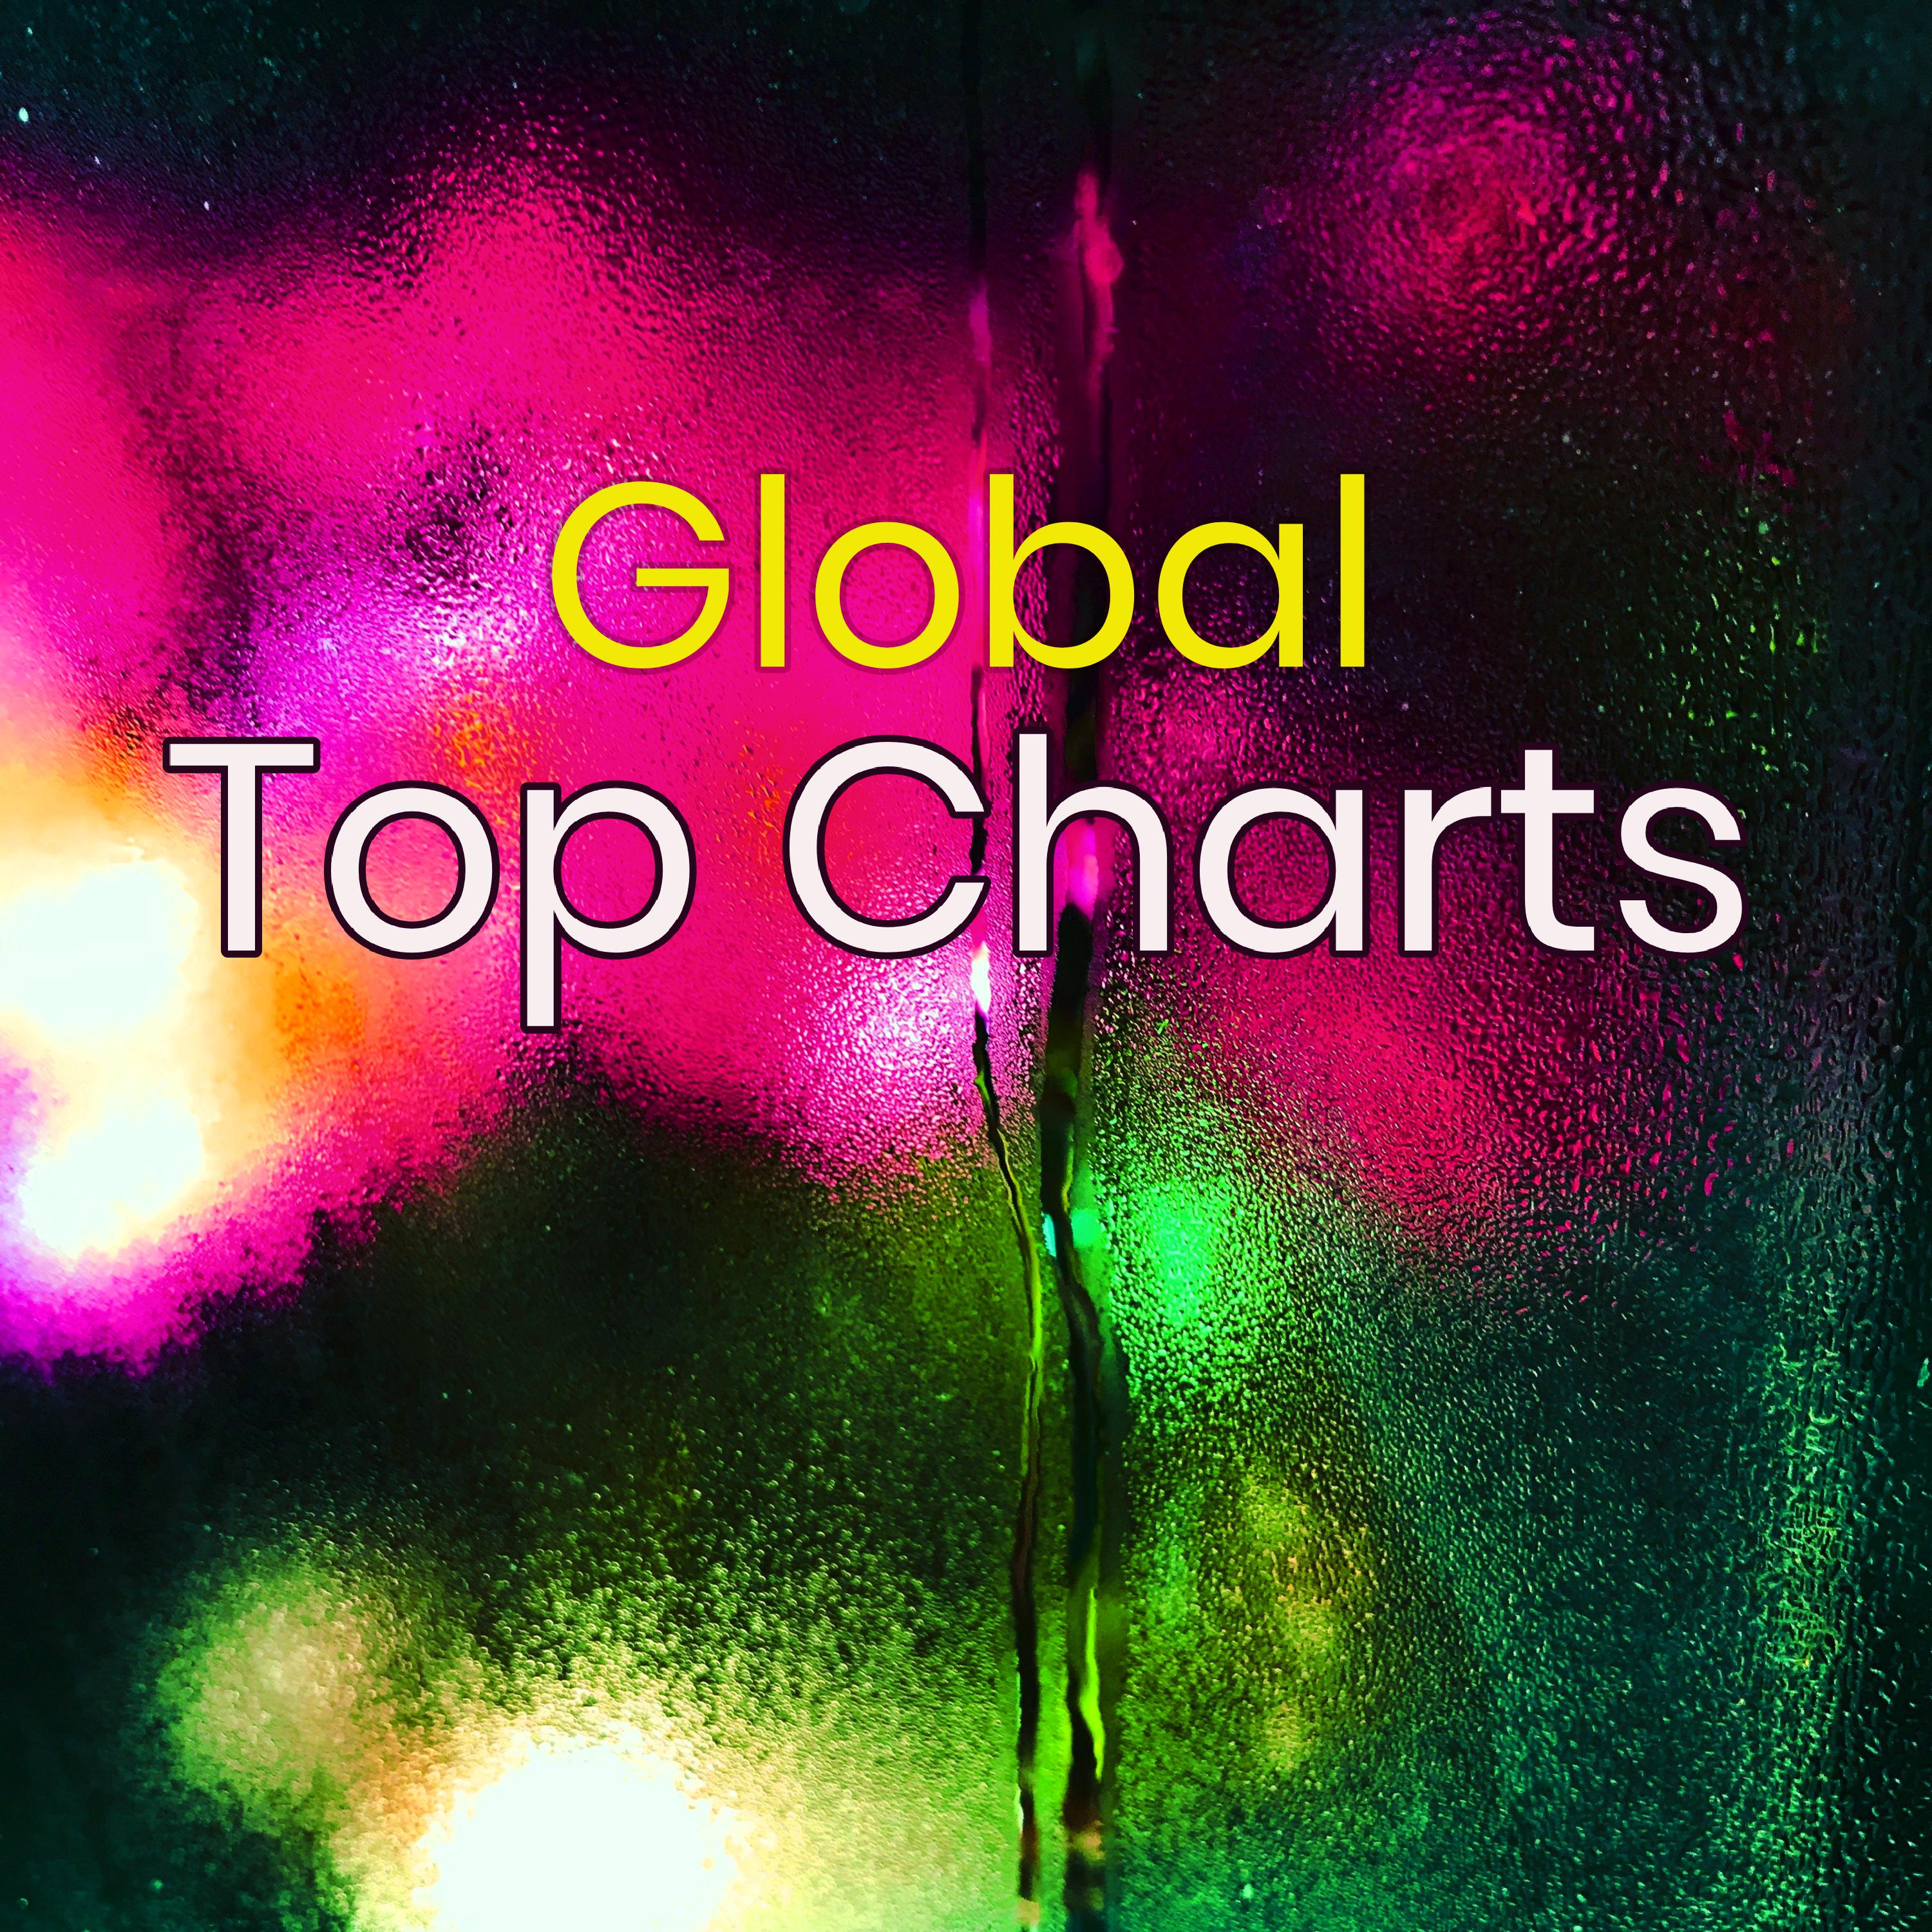 Global Top Charts  Top 10 Viral Songs